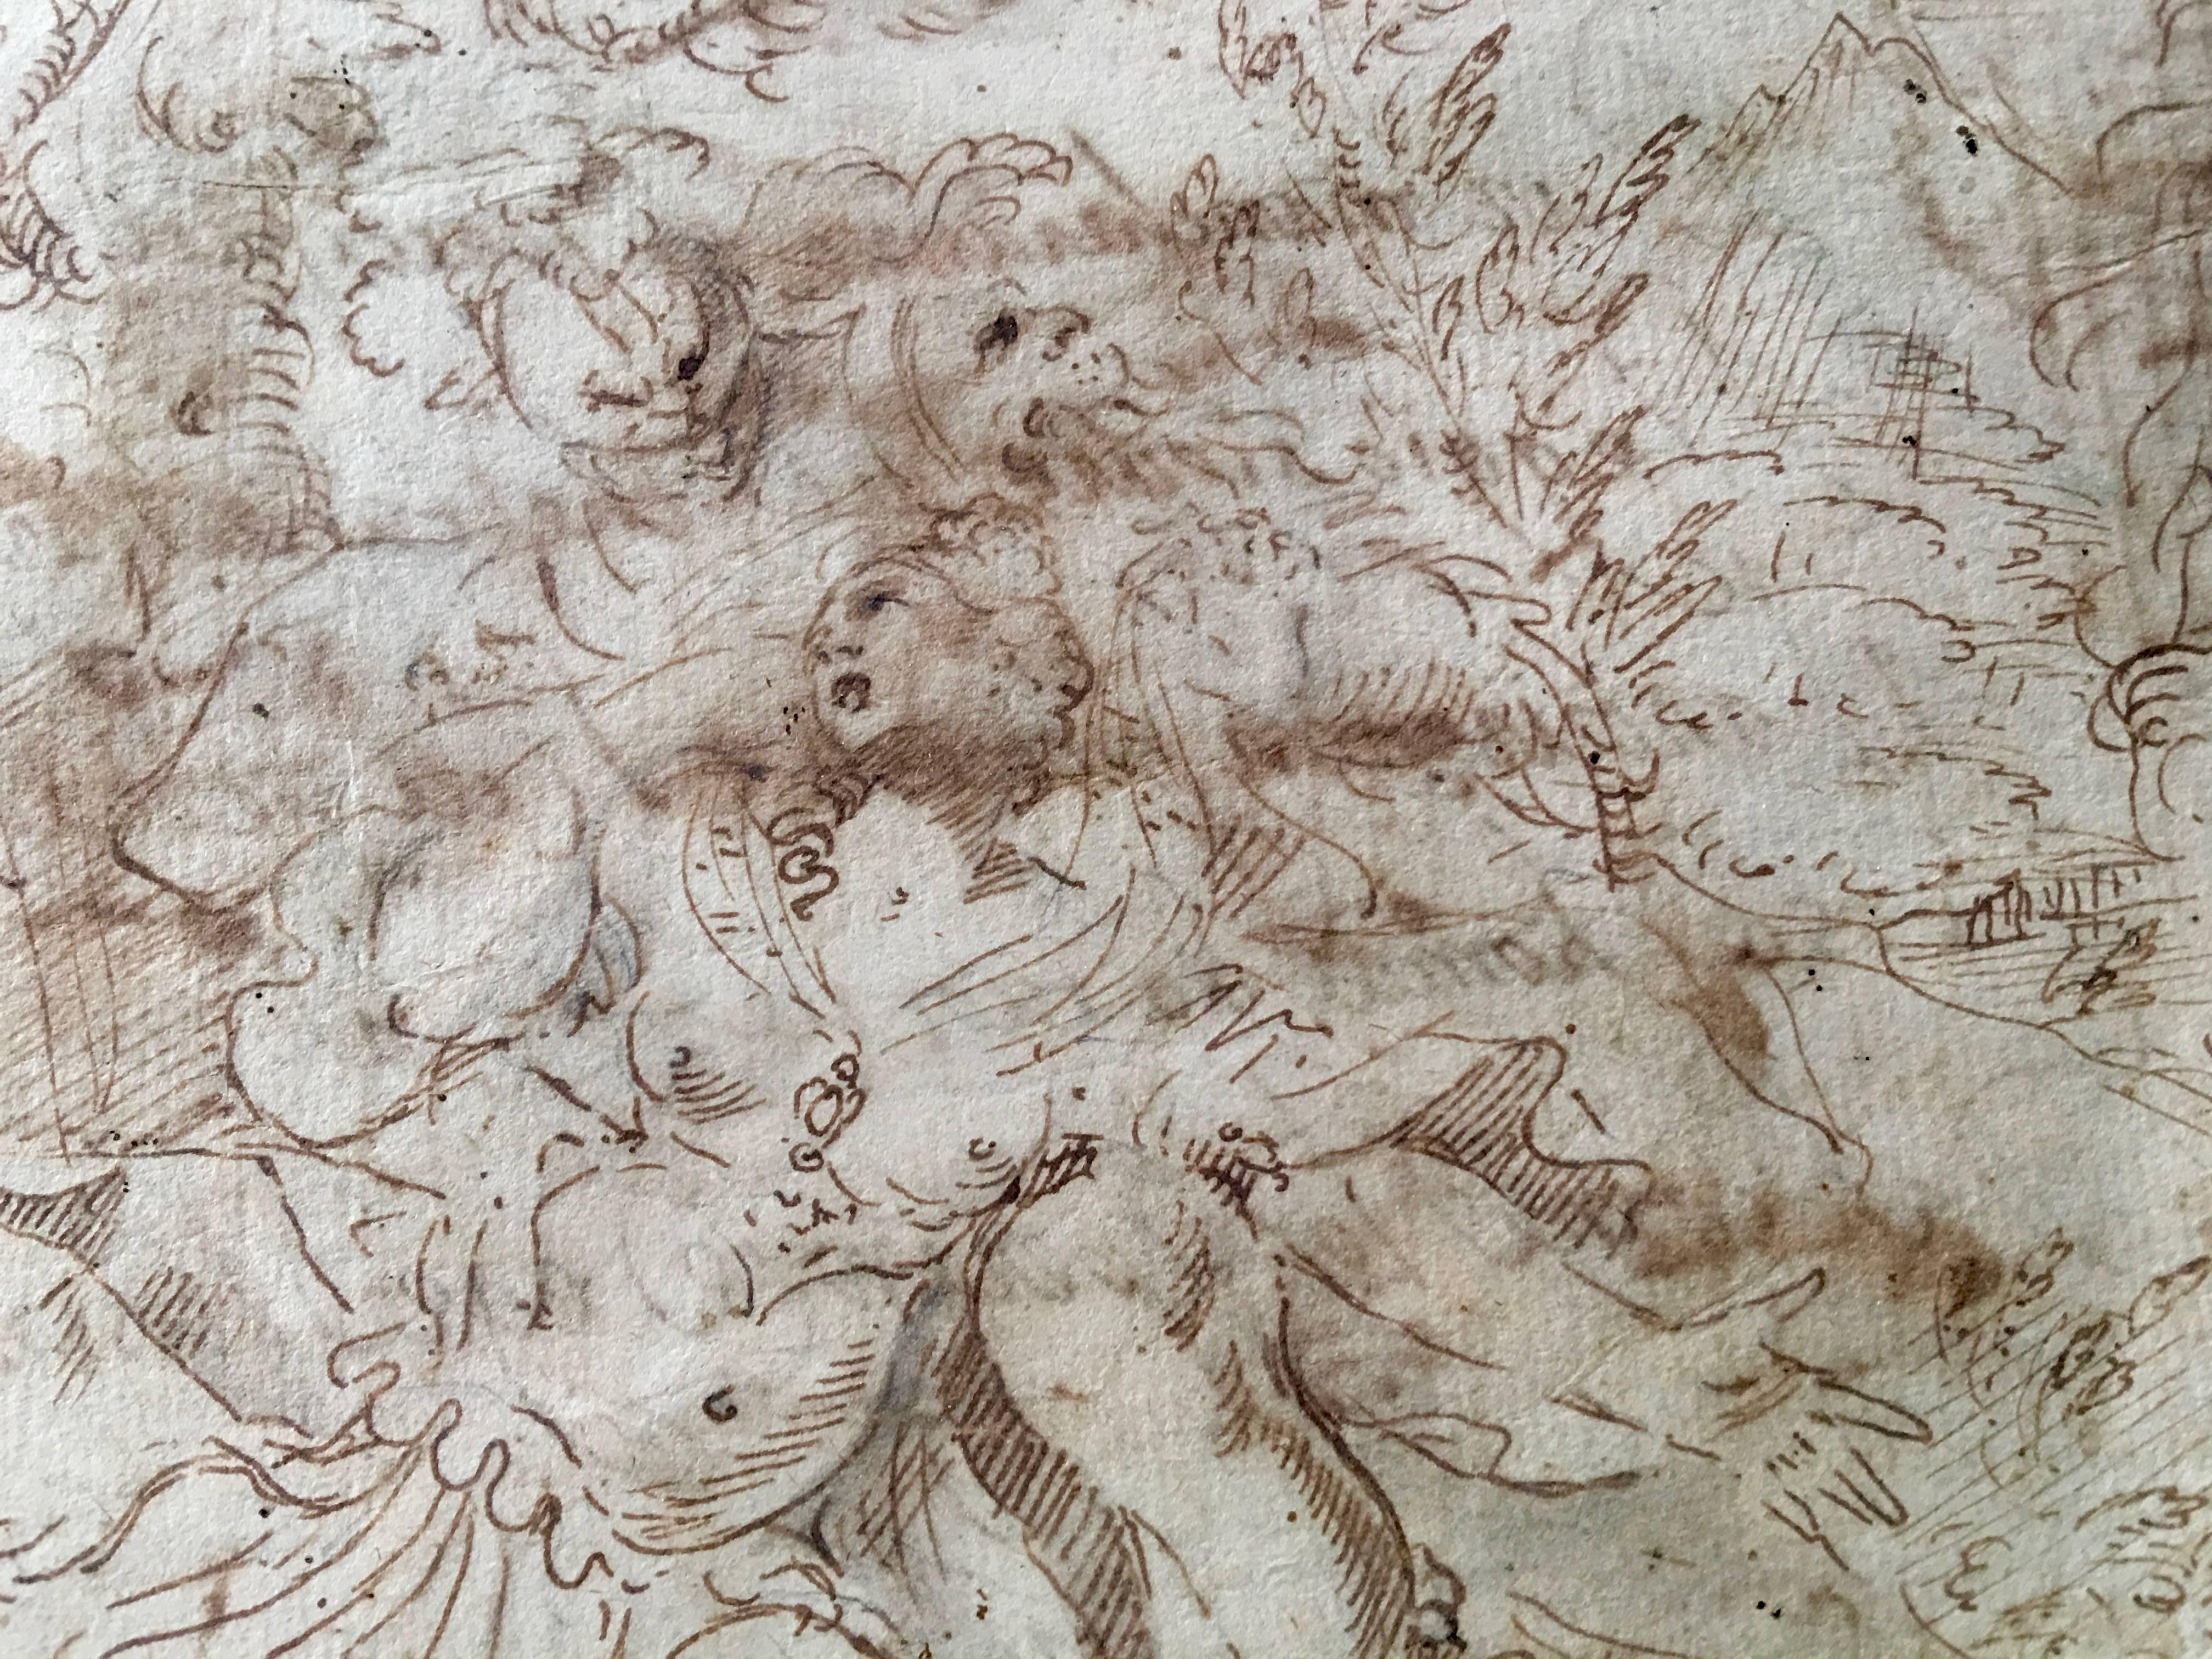 Baroque 17th Century Italian Drawing of 